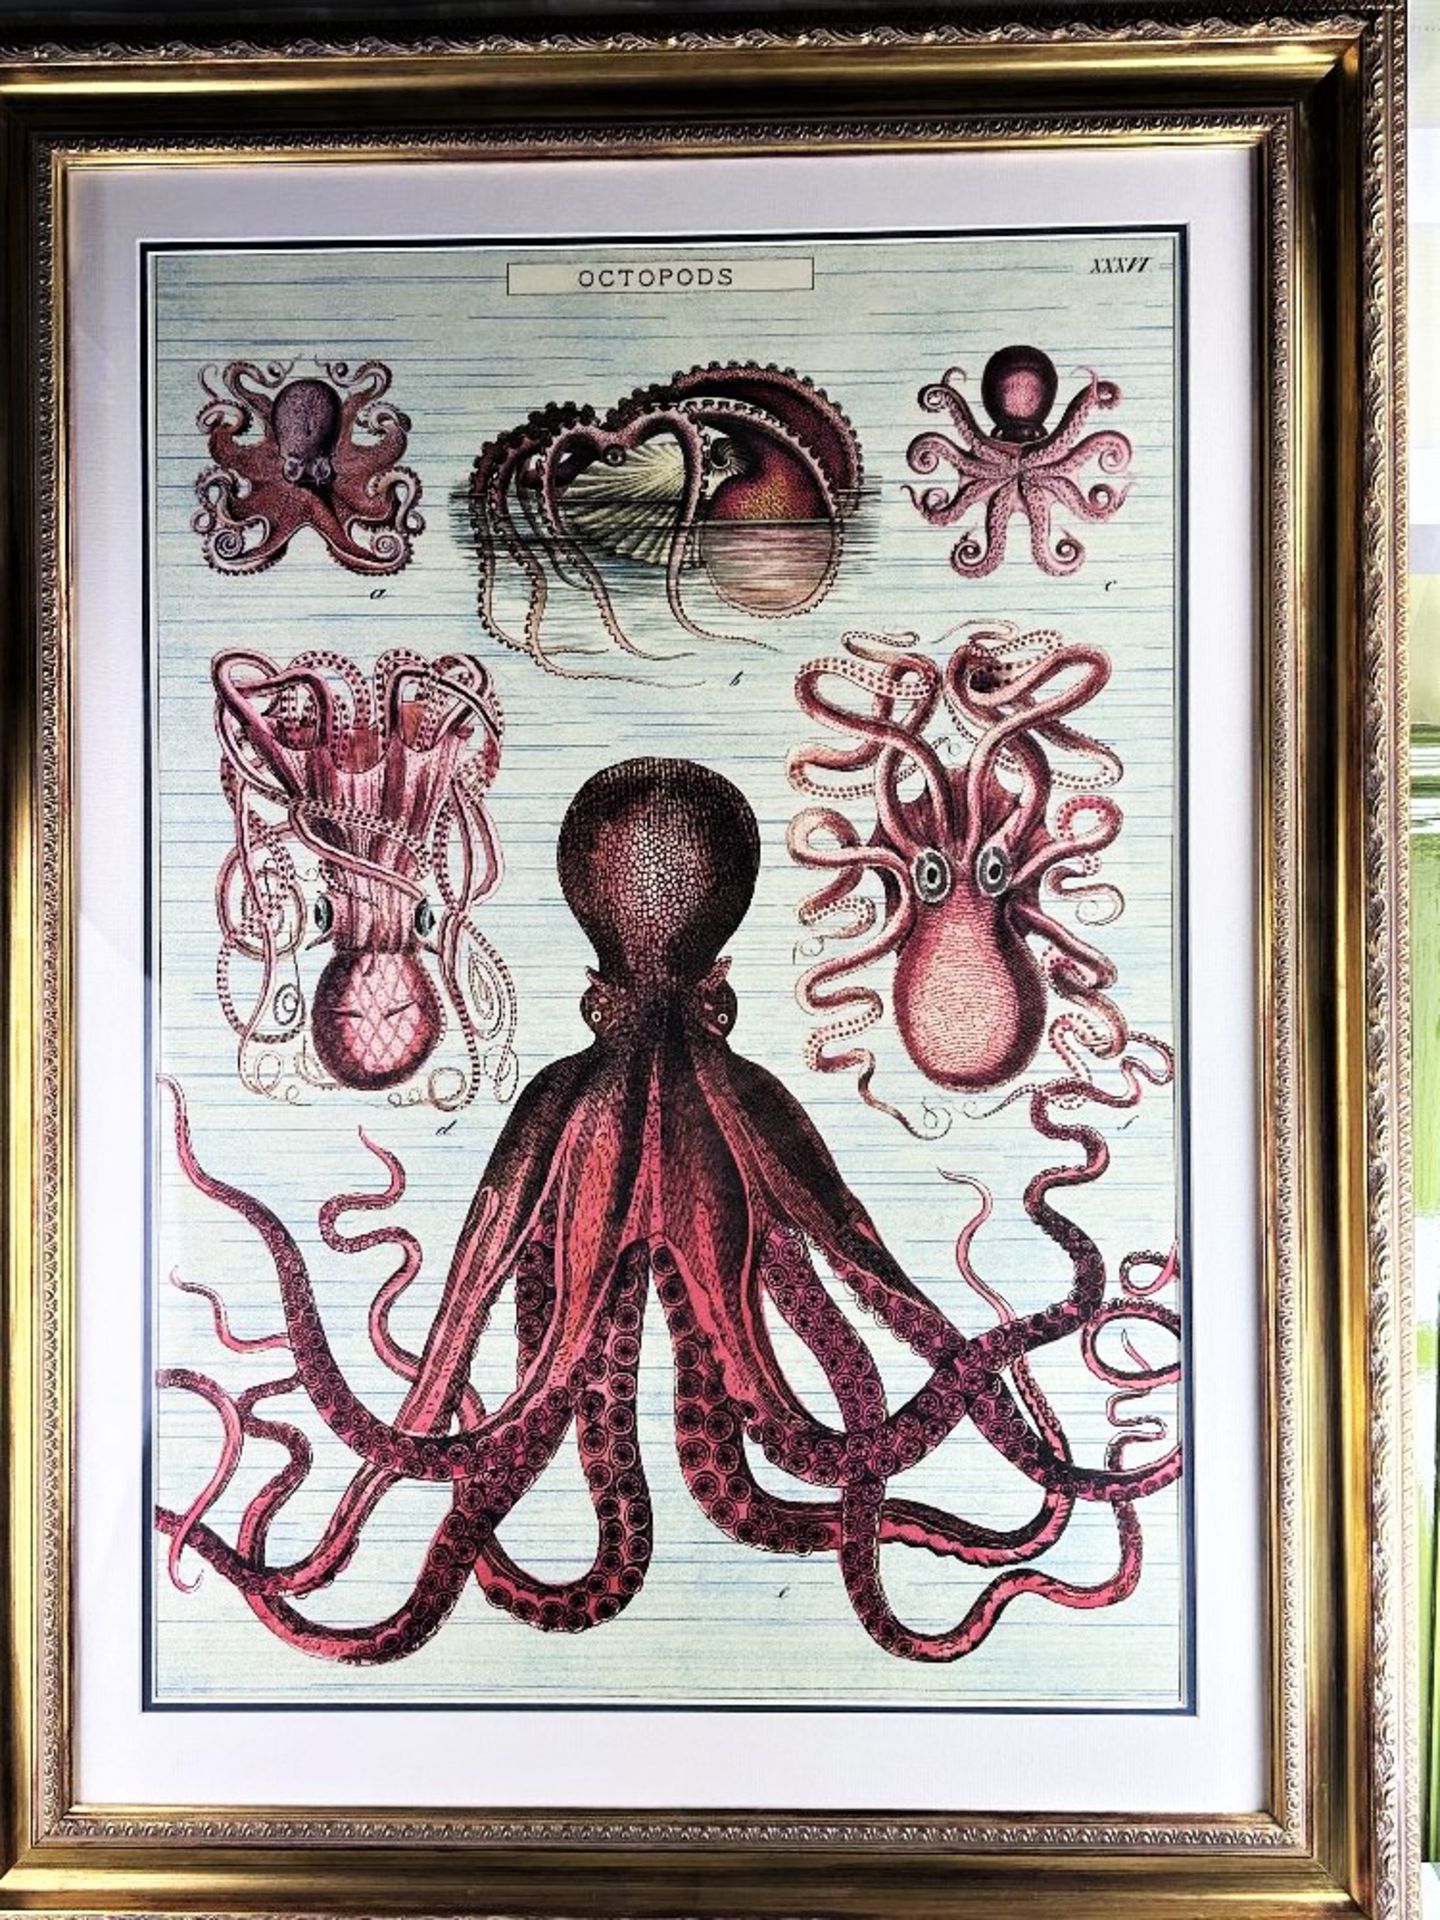 Large Vintage Print -Octopods-Professionally Framed - Image 5 of 5